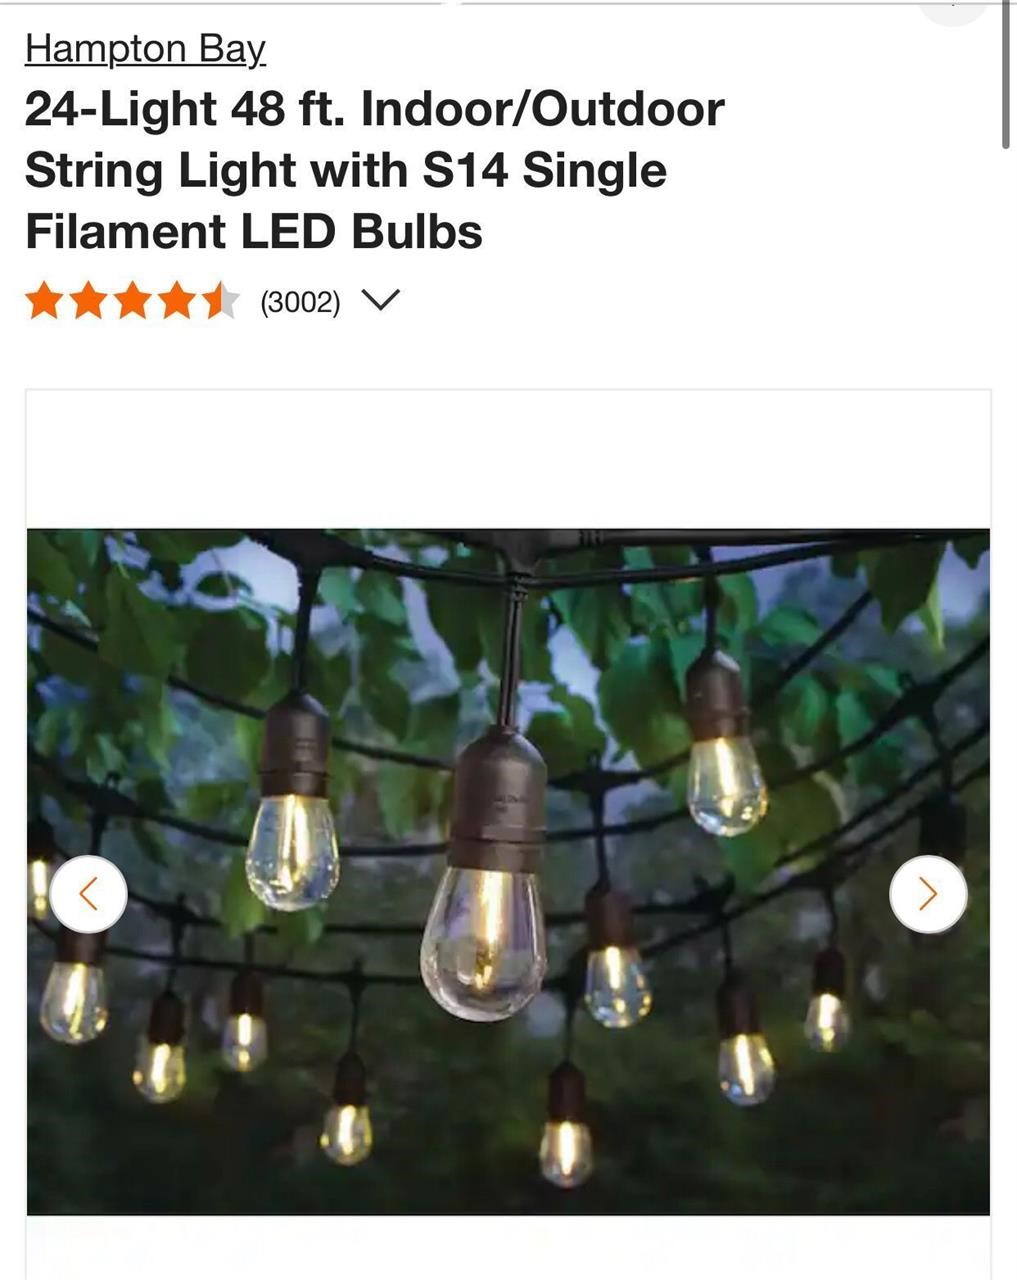 24-Light 48 ft. Indoor/Outdoor String Light